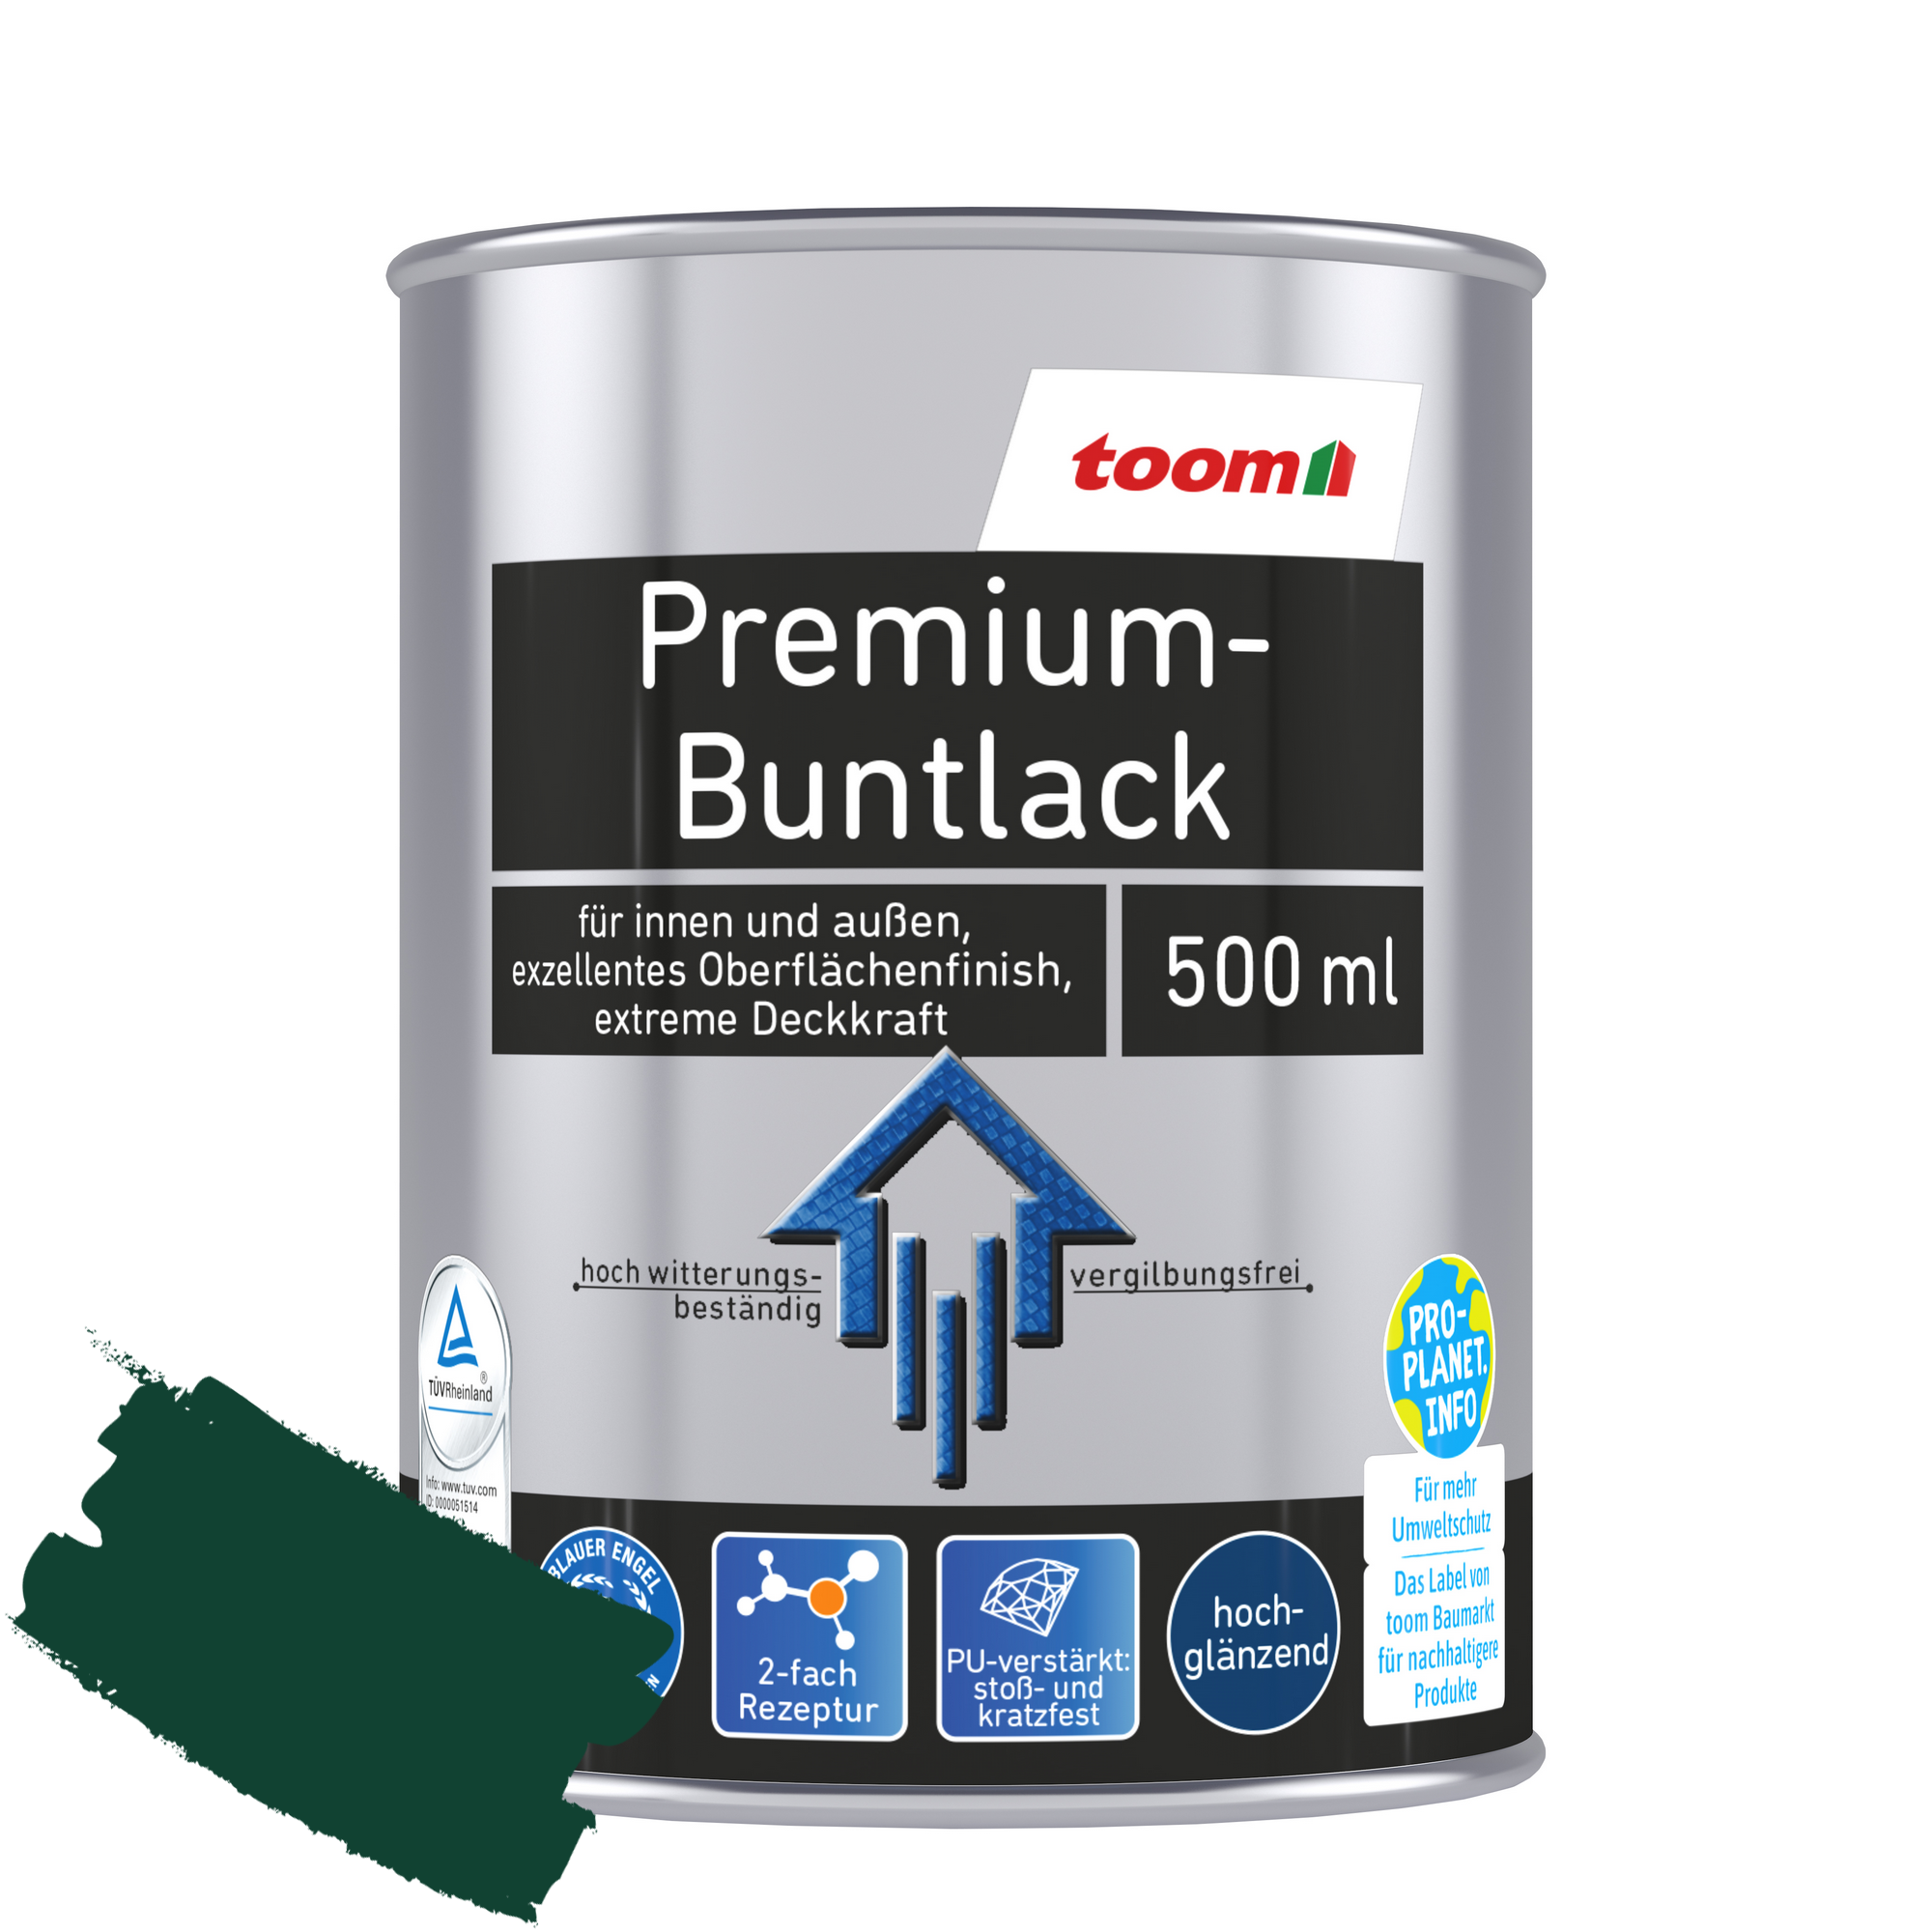 Premium-Buntlack moosgrün glänzend 500 ml + product picture